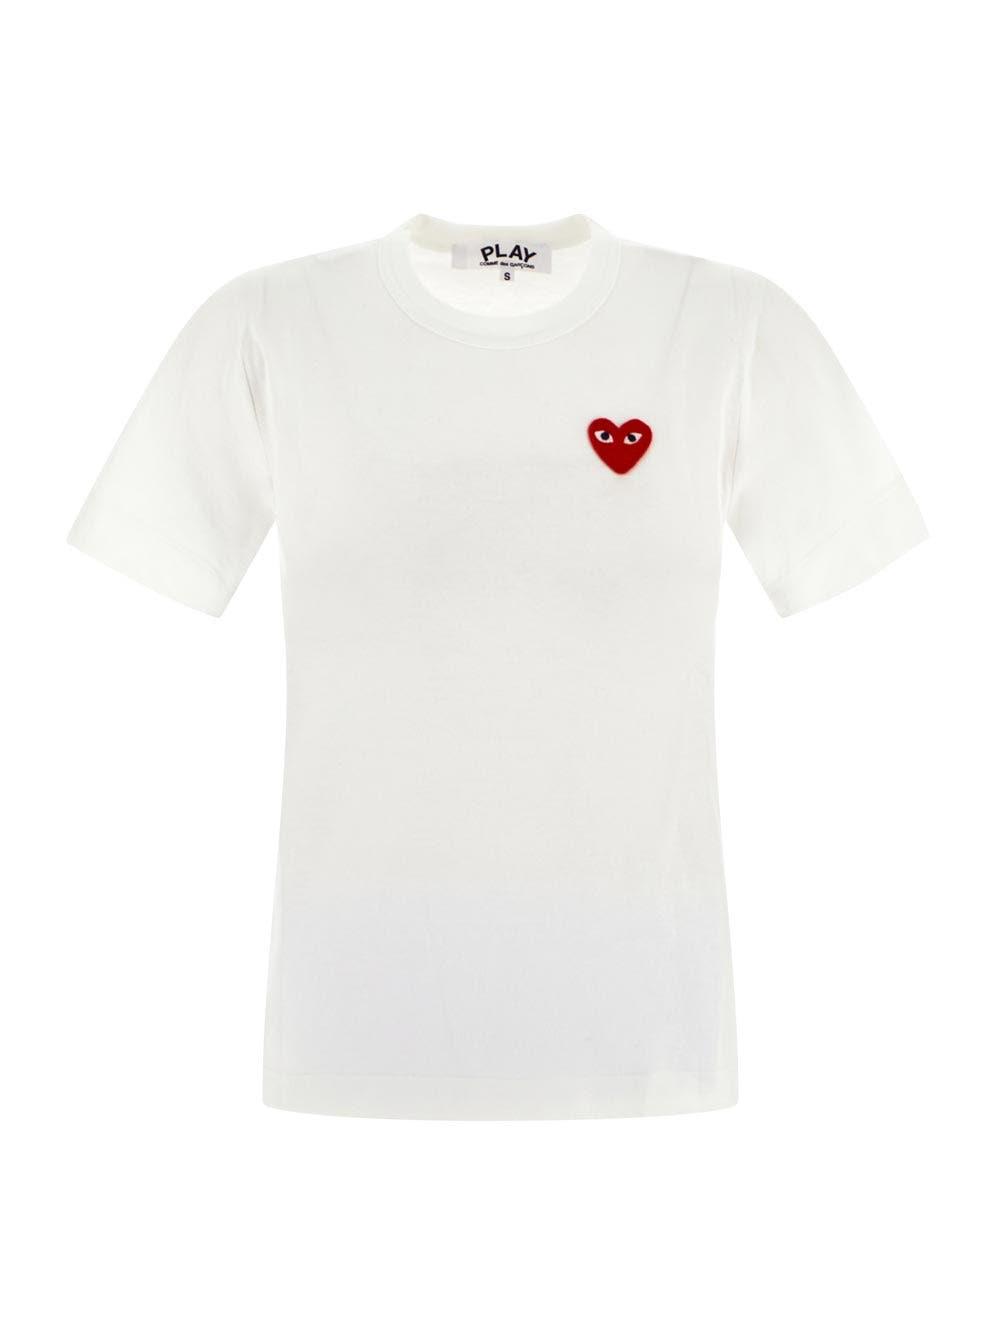 Comme des Garçons Play White Embroidered Heart T-shirt